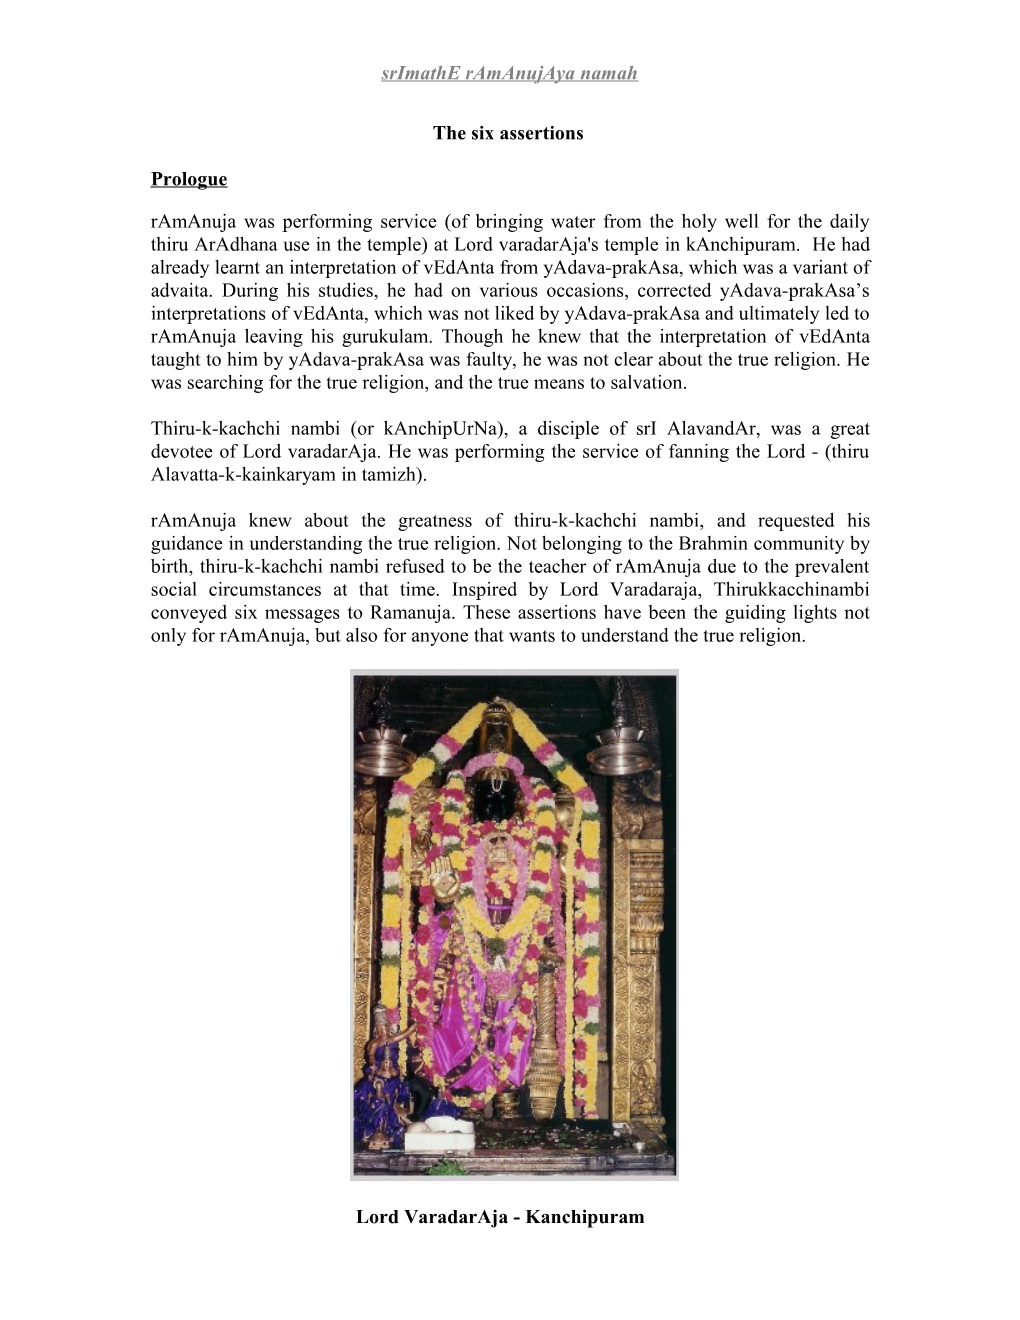 The Six Axioms Told by Lord Varadaraja to Sri Ramanuja Through Sri Thiru-K-Kachchi Nambi